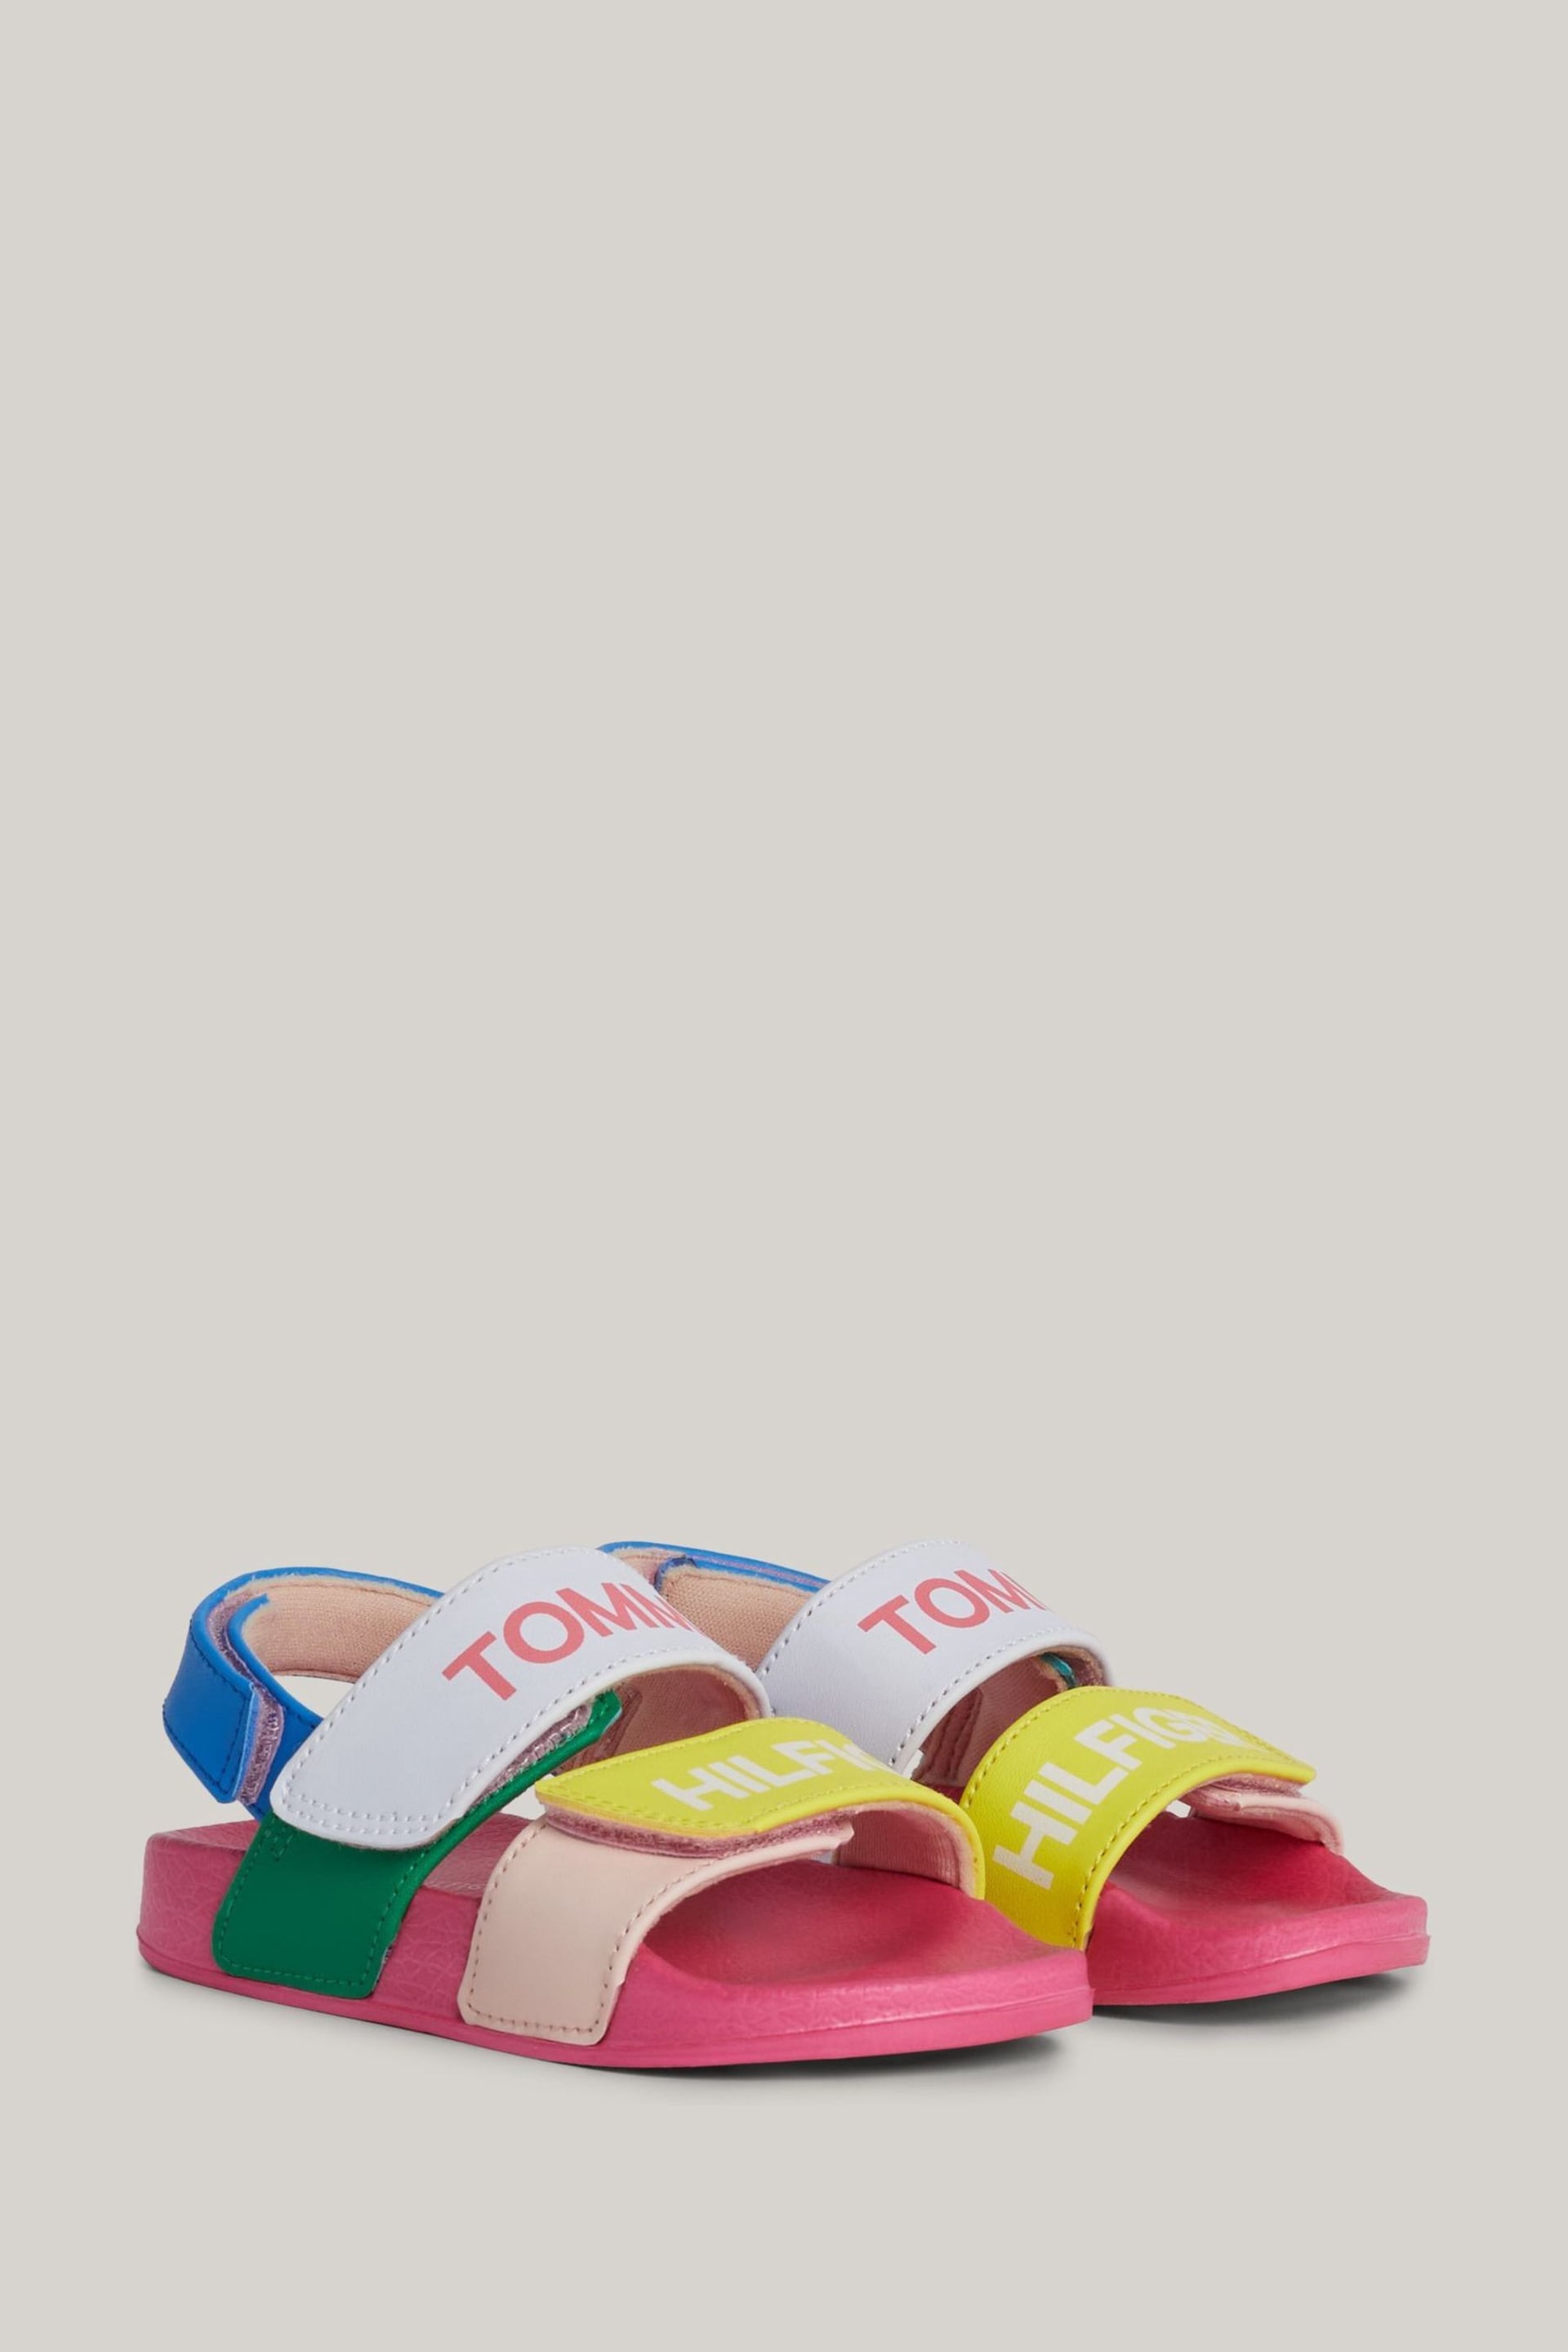 Tommy Hilfiger Velcro Multi Sandals - Image 5 of 5